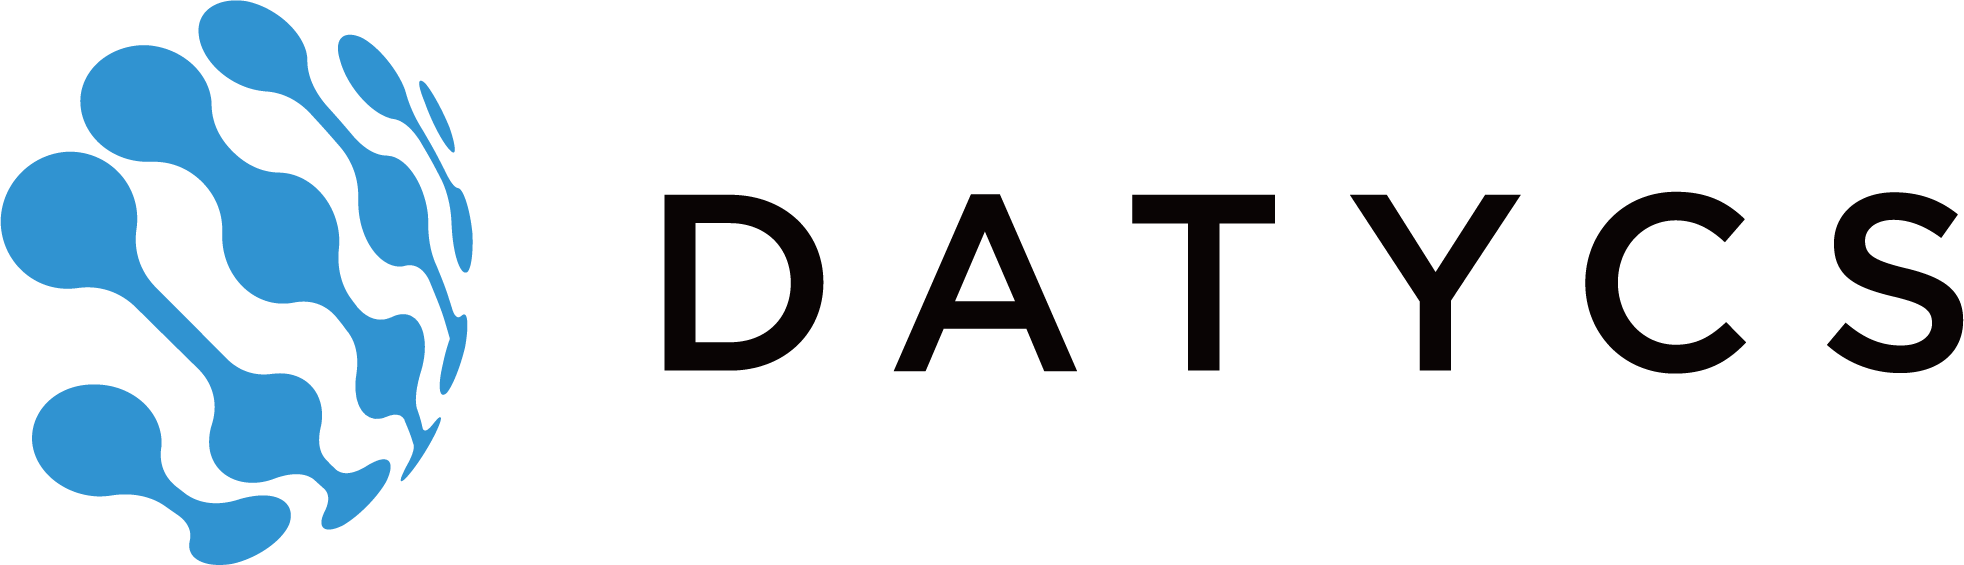 Datycs logo